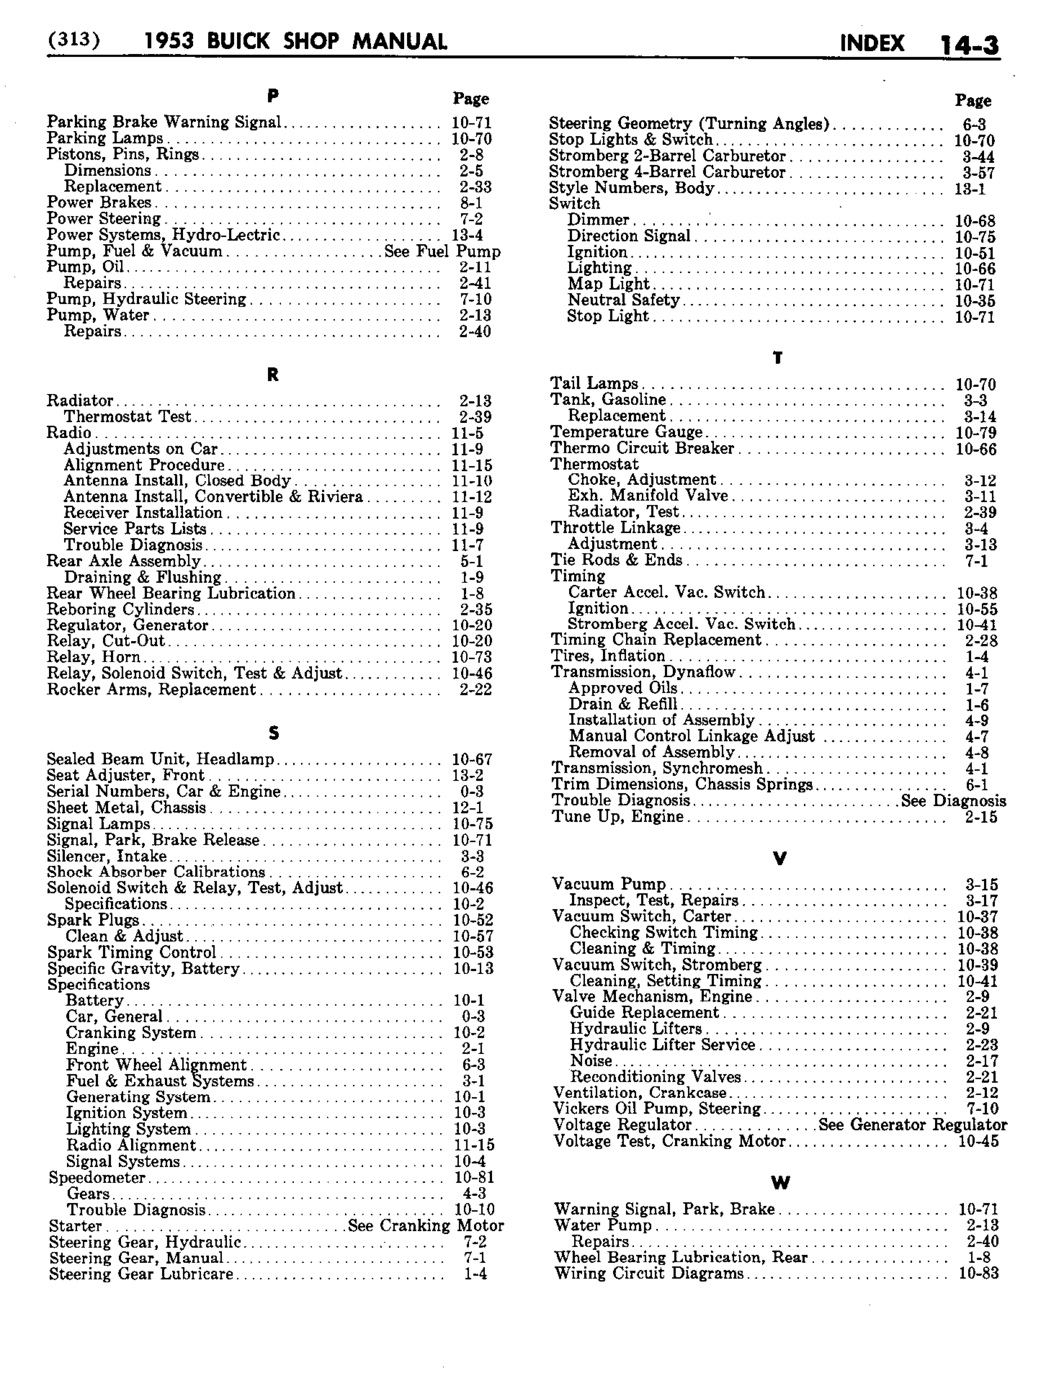 n_15 1953 Buick Shop Manual - Index-003-003.jpg